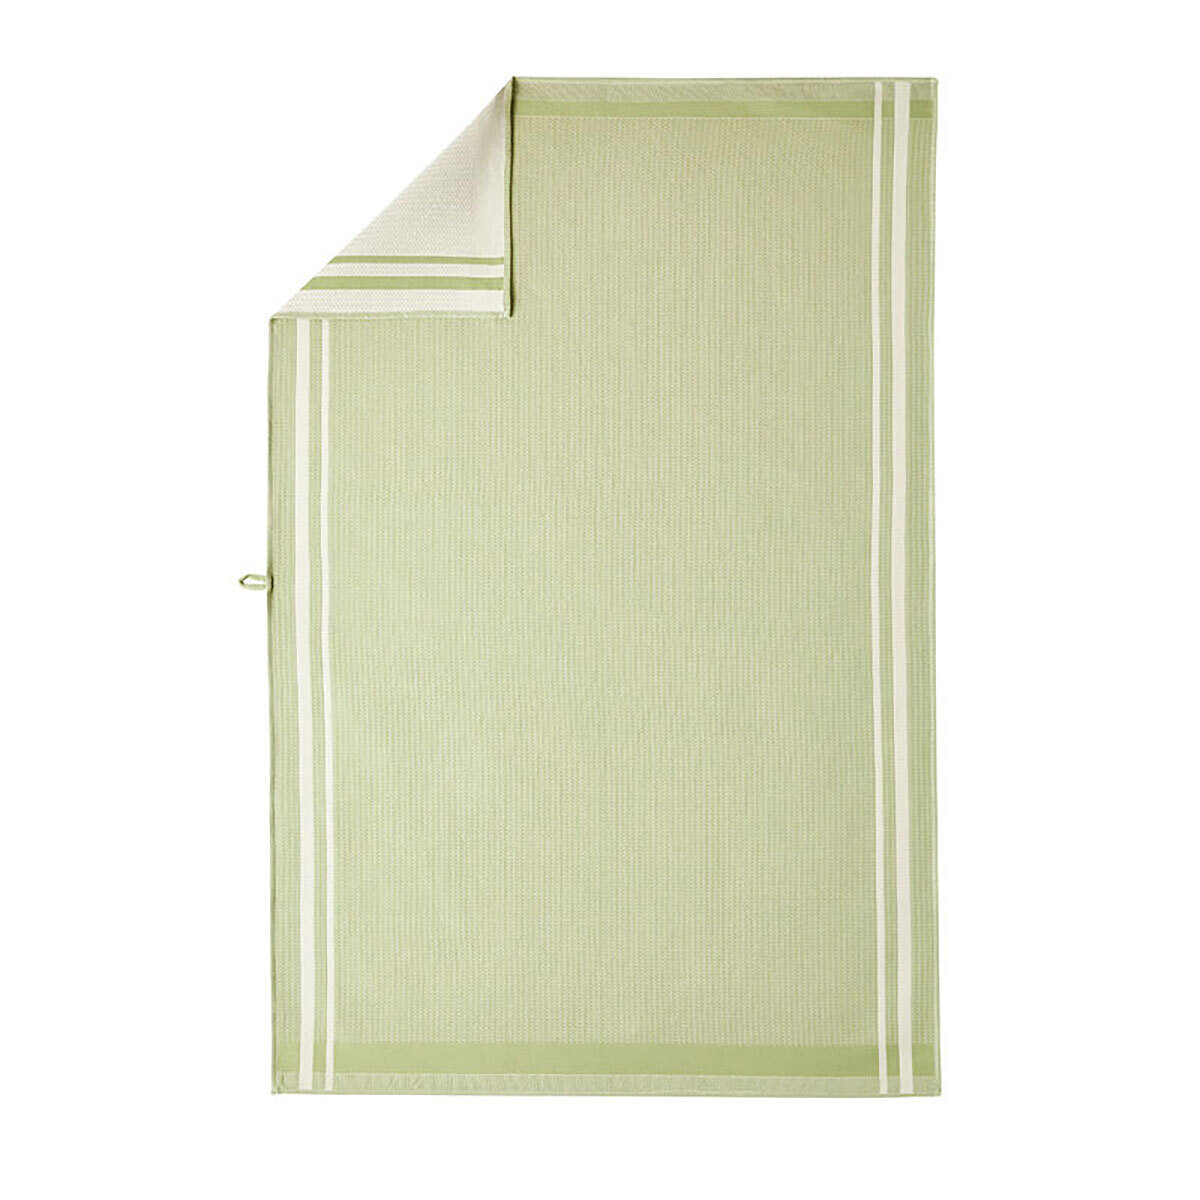 Le Jacquard Francais Duetto Green Bath Towel 28 x 55 Inch 28651 Set of 4